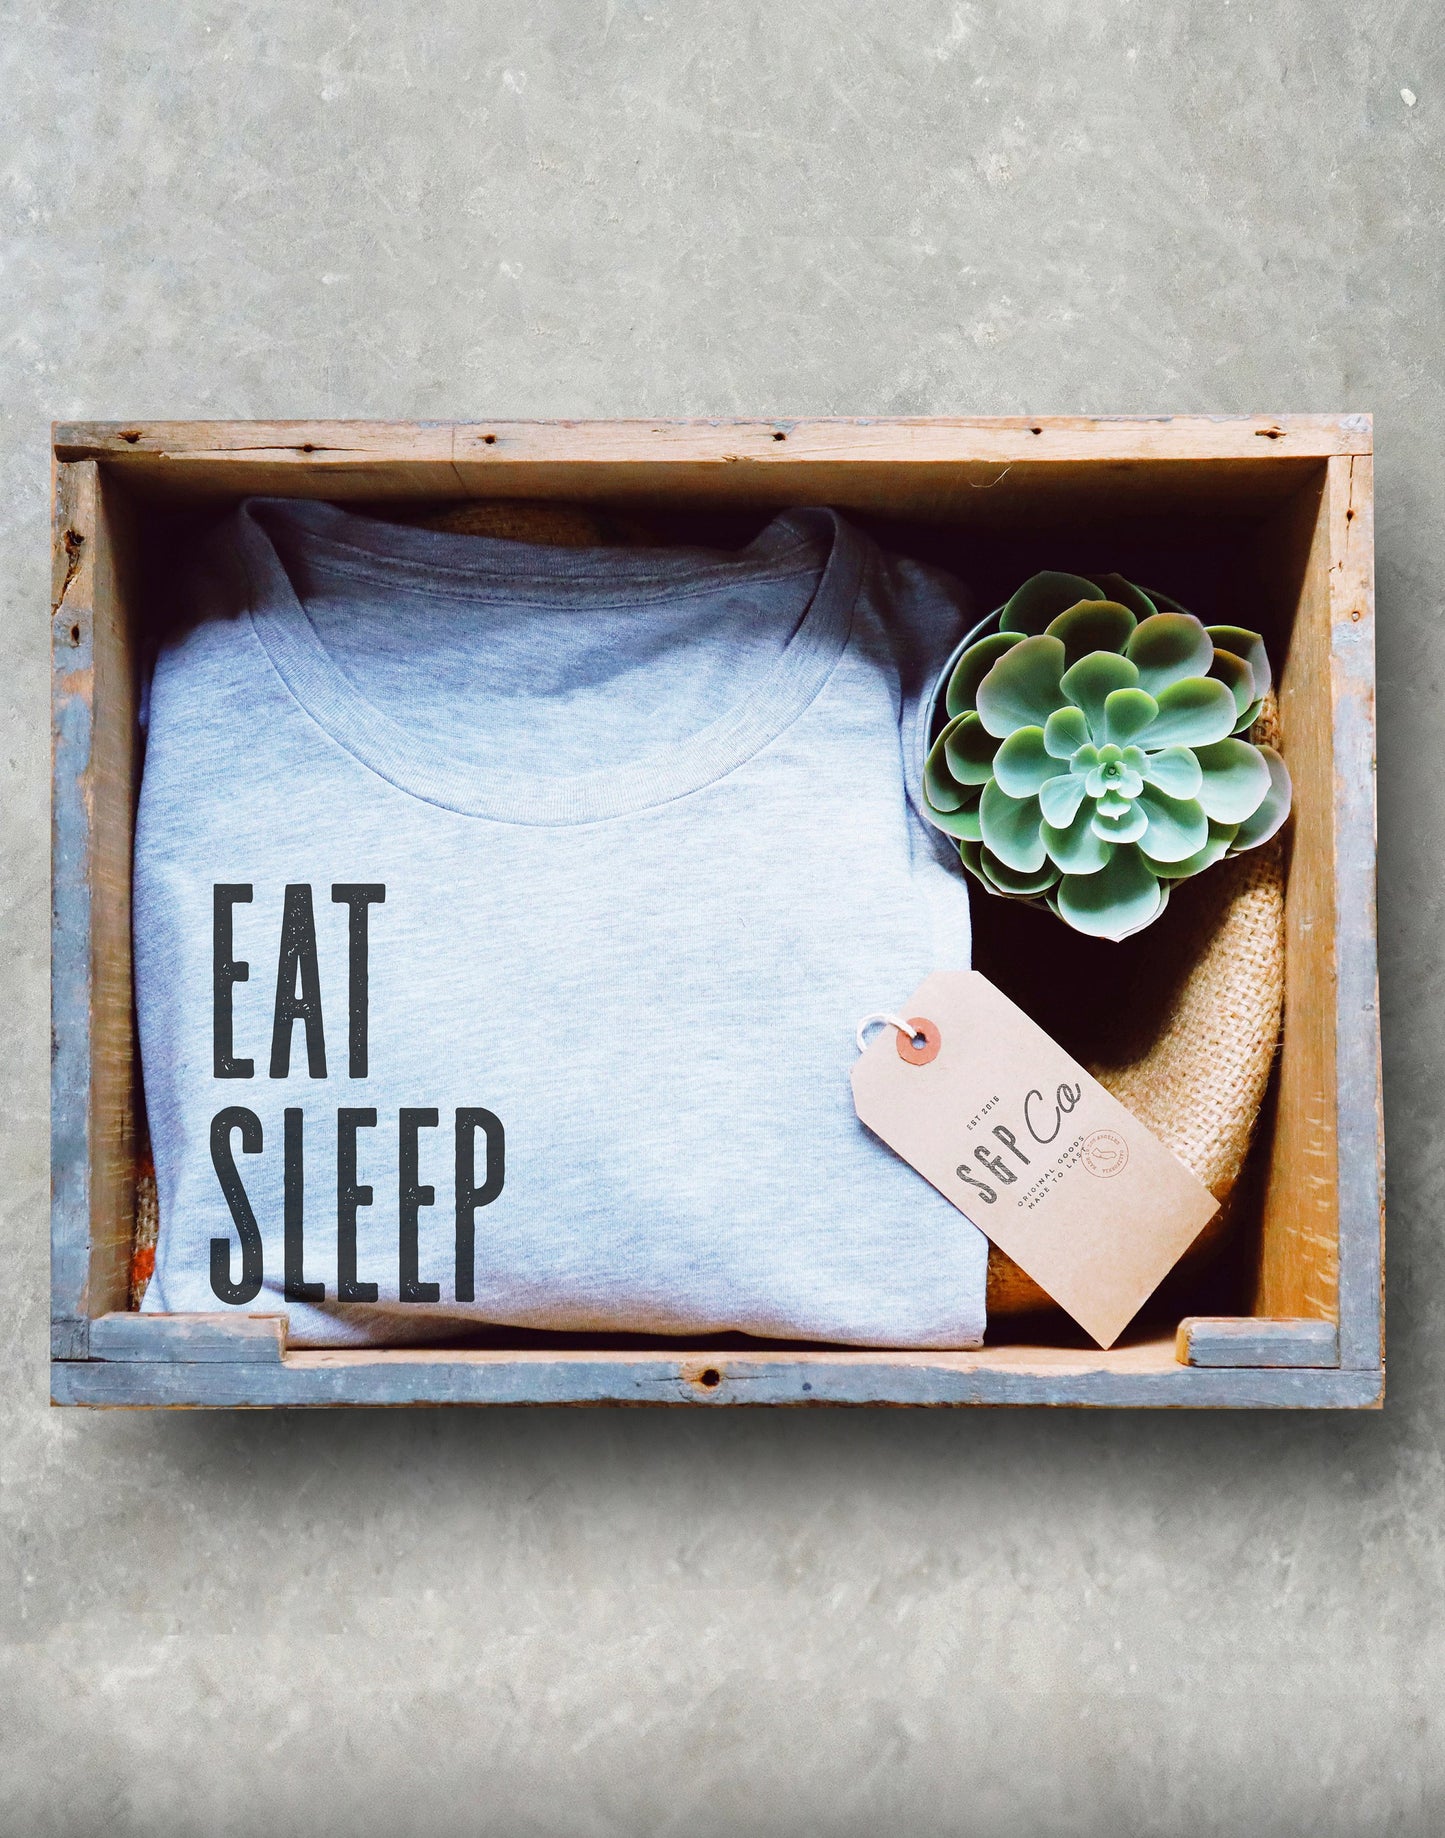 Eat Sleep Backgammon Repeat Unisex Shirt - Backgammon Gift, Board Game Shirt, Board Game Gift, Board Game Lover, Board Game Organizer